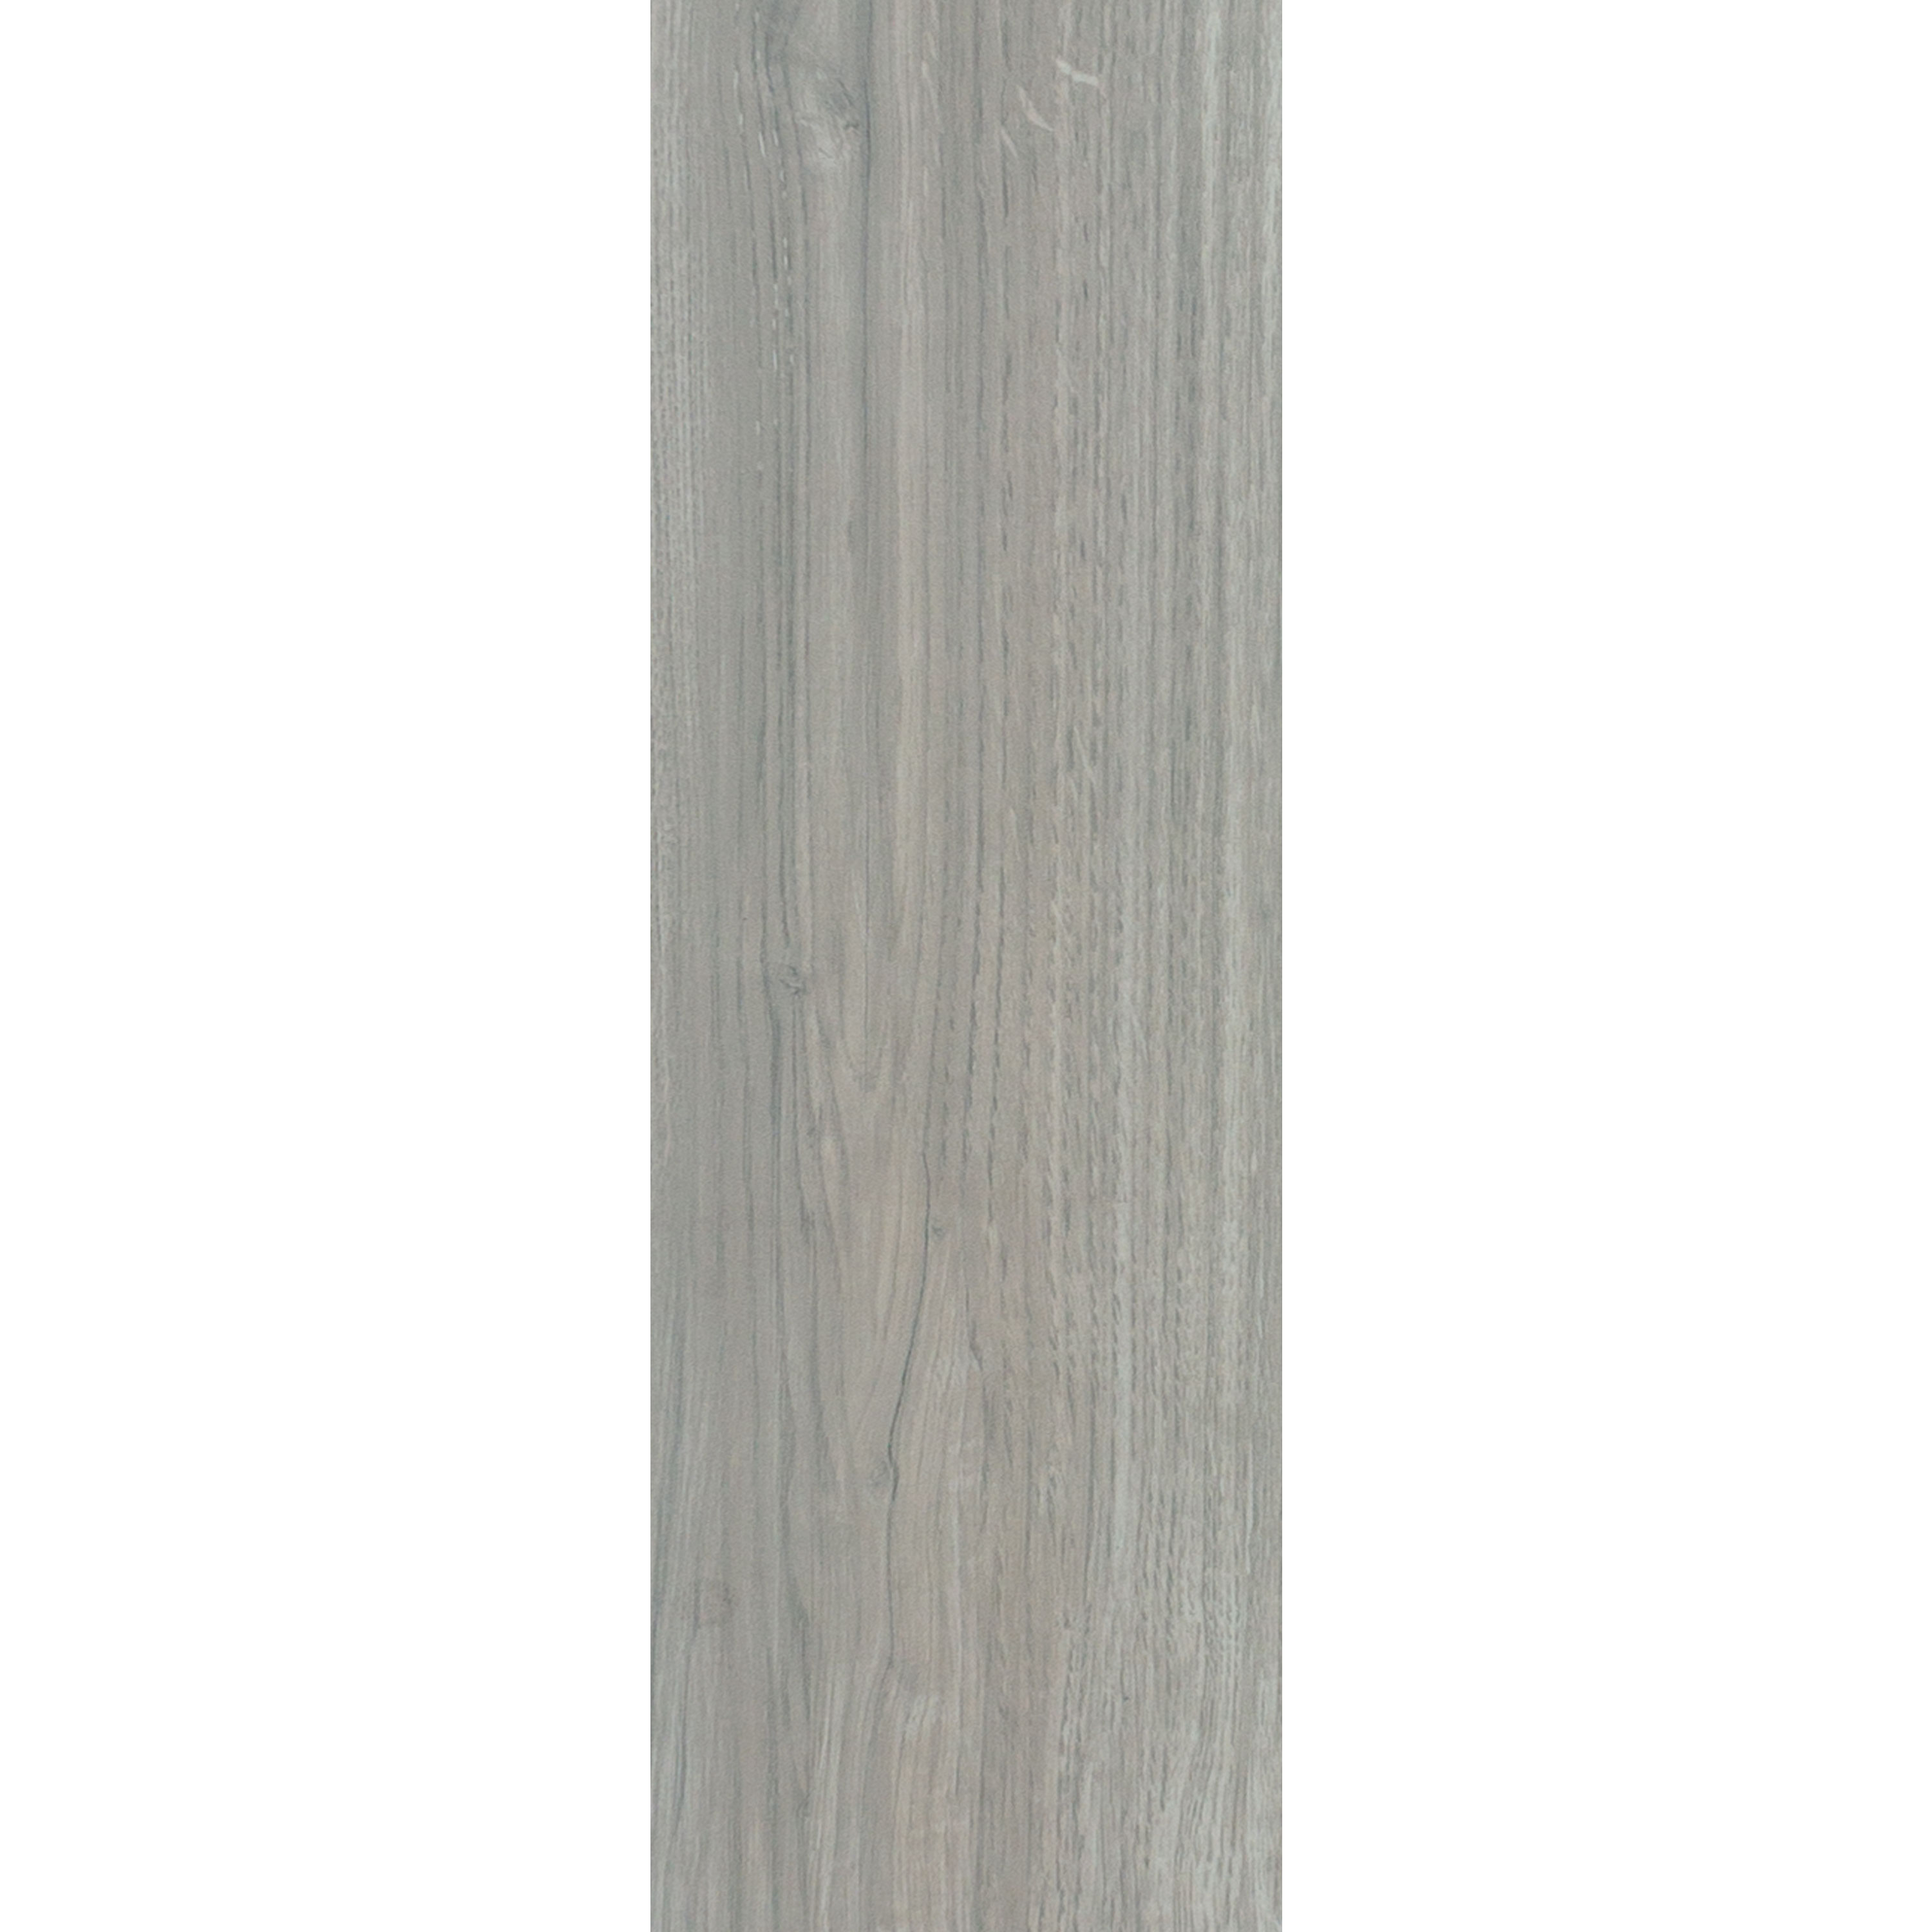 Bodenfliesen Holzoptik Fullwood Beige 20x120cm 